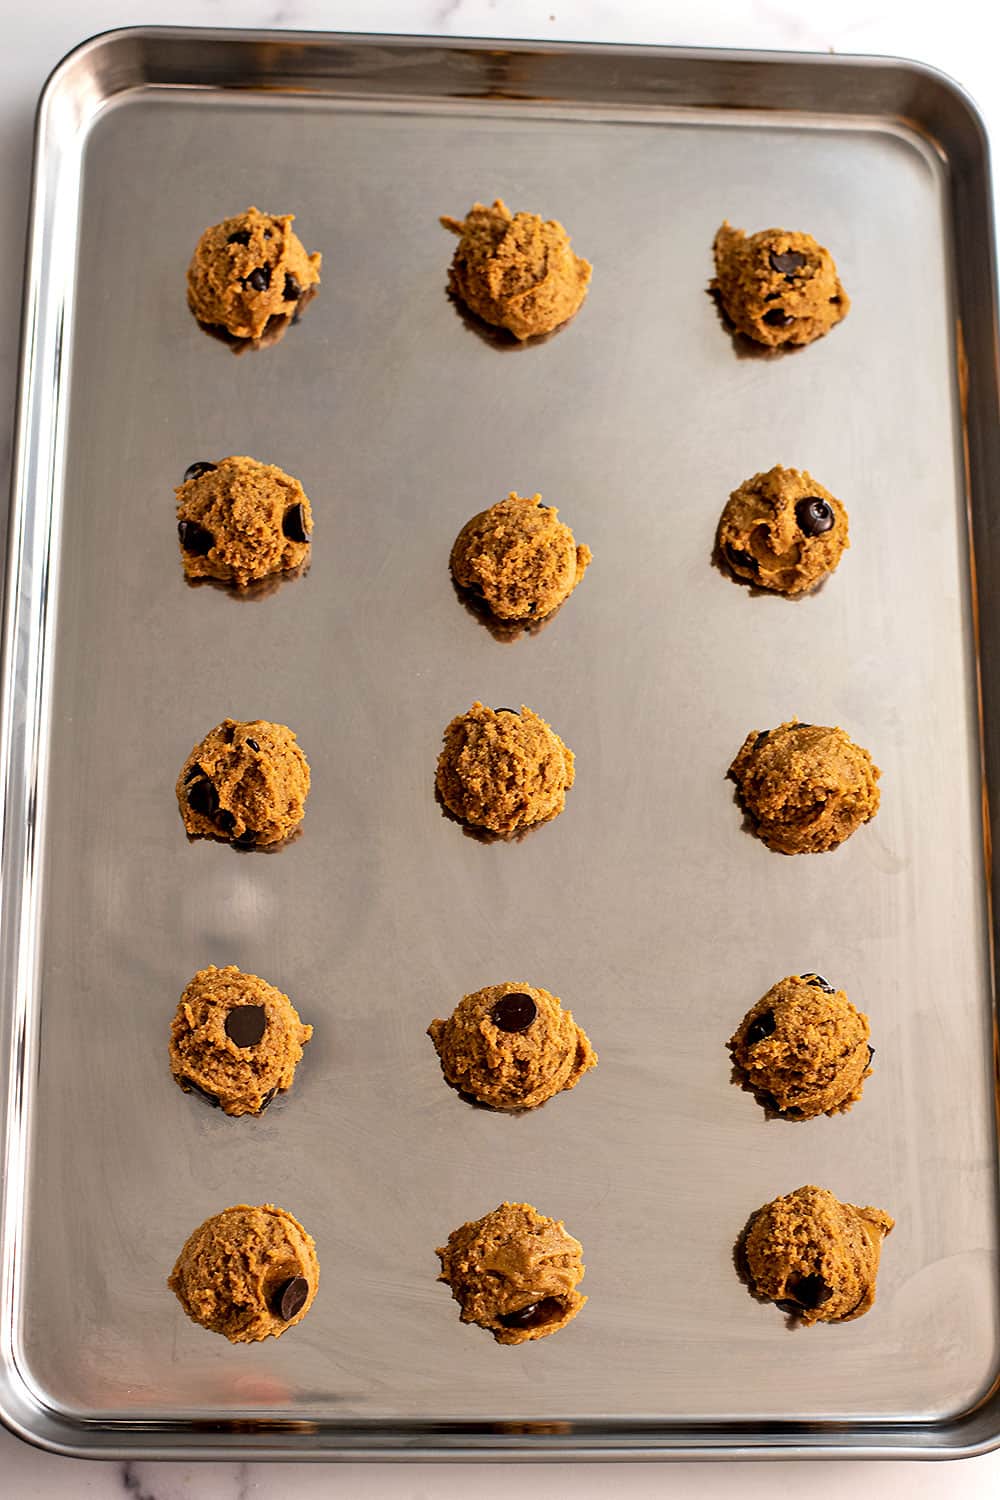 Chocolate chip oat flour cookie dough balls on baking sheet.